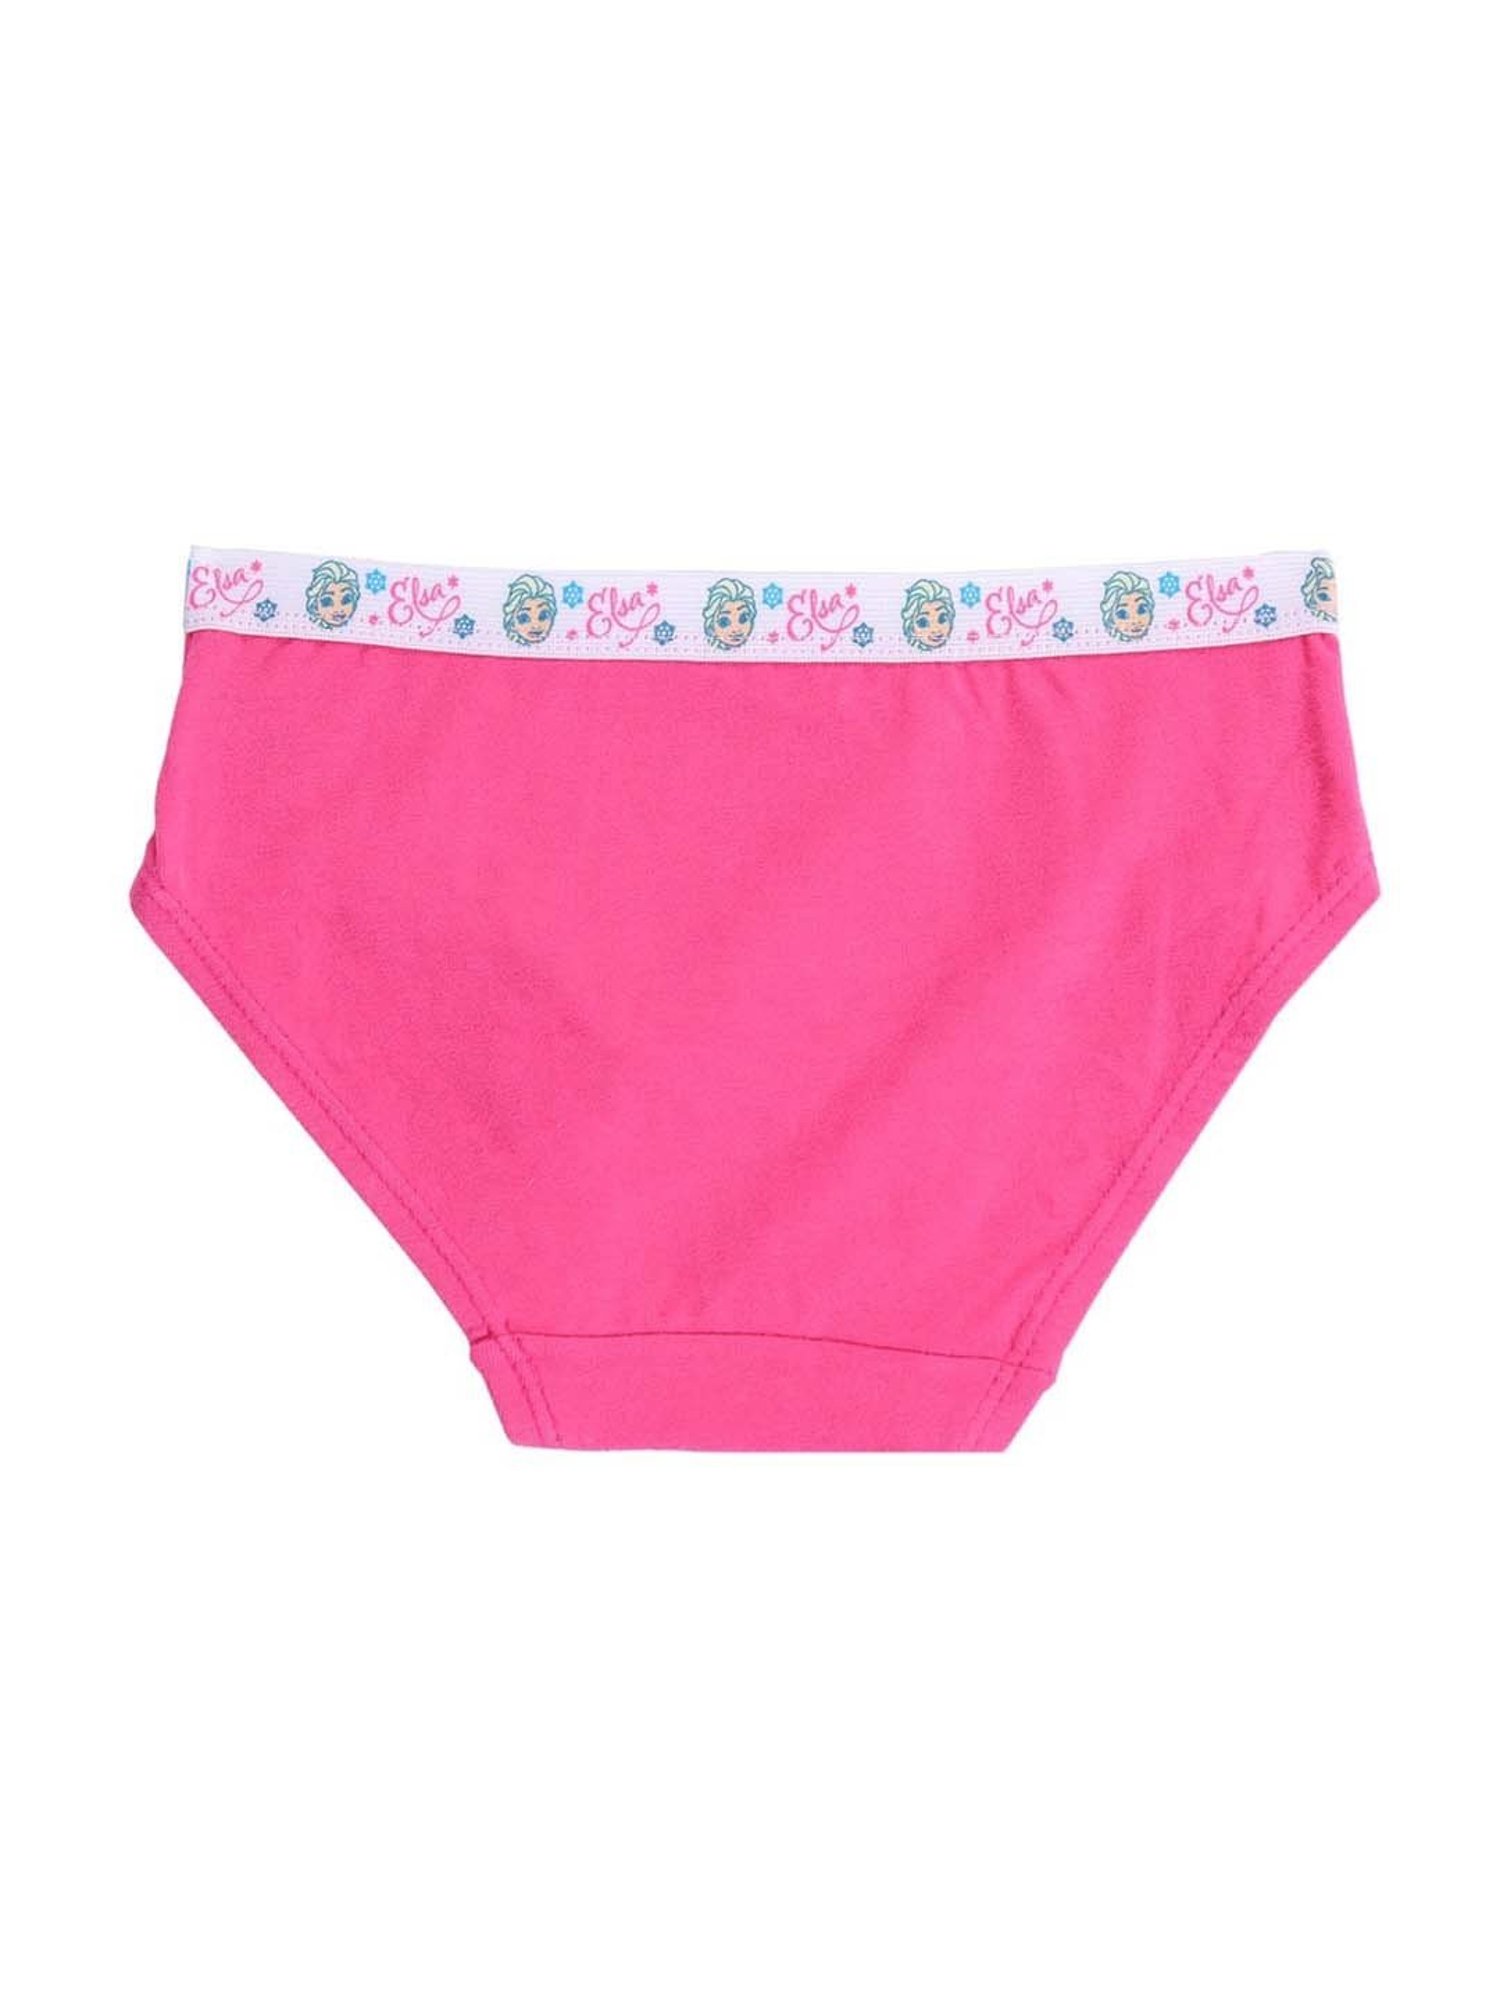 Buy Bodycare Kids Multi Cotton Printed Panties for Girls Clothing